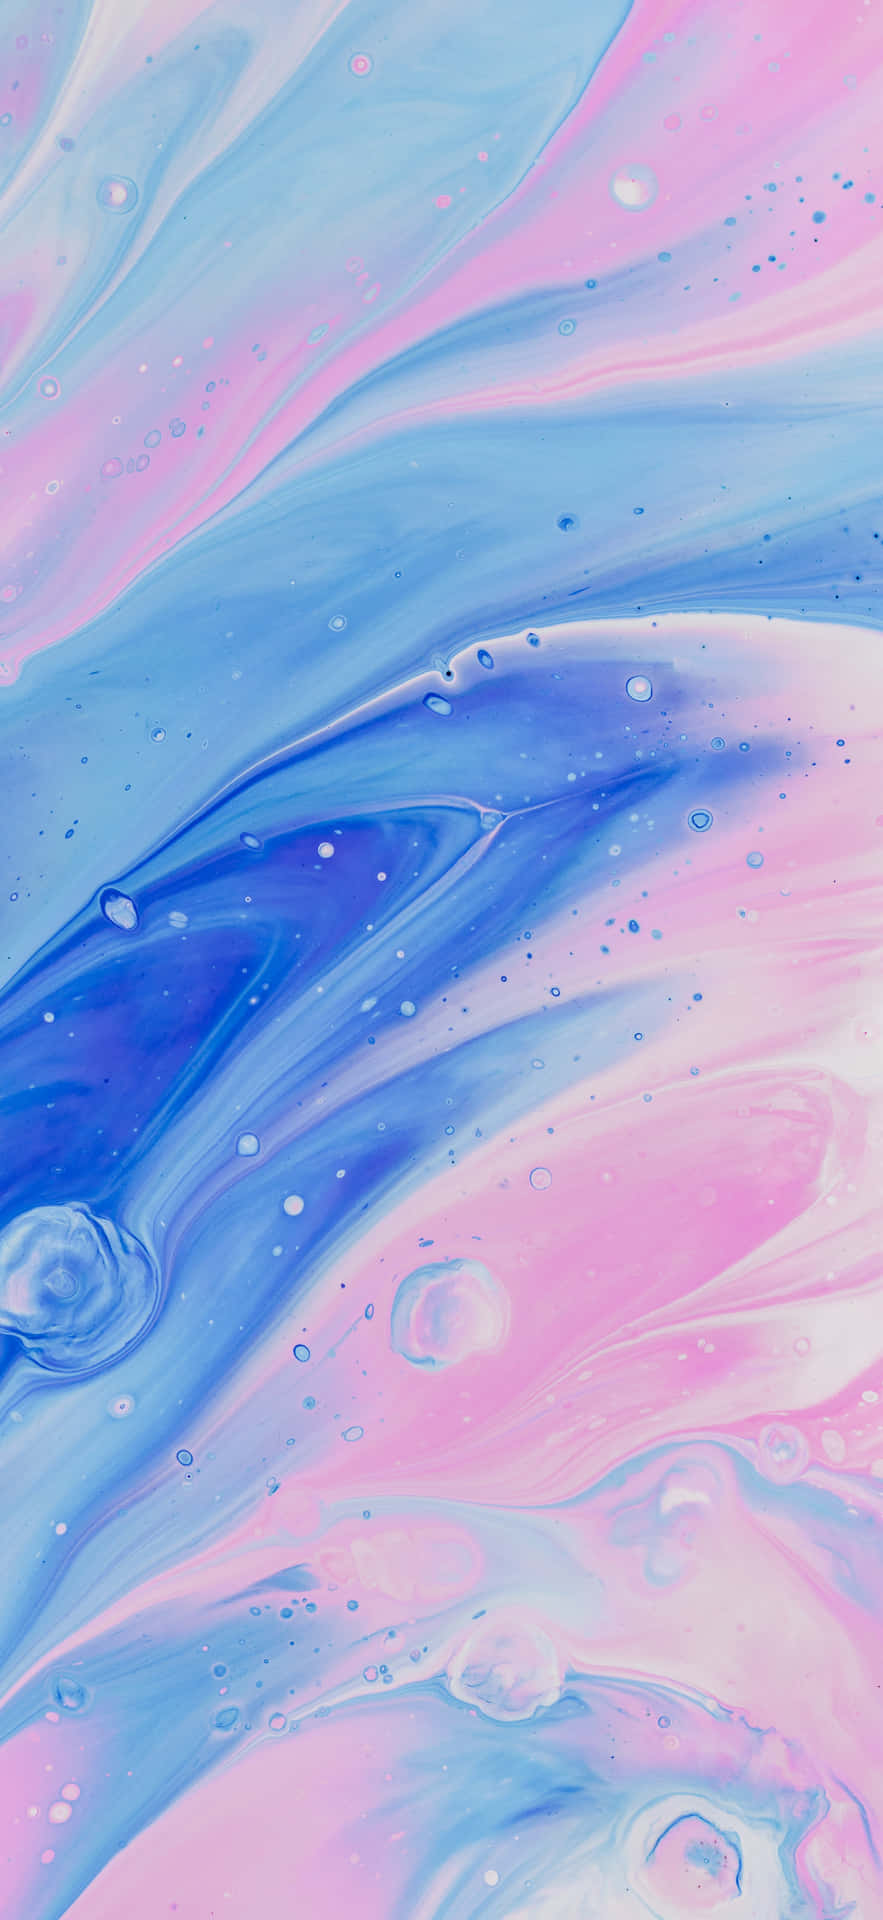 Iosiphone X Marmor-hintergrund In Pastellblau-rosa.